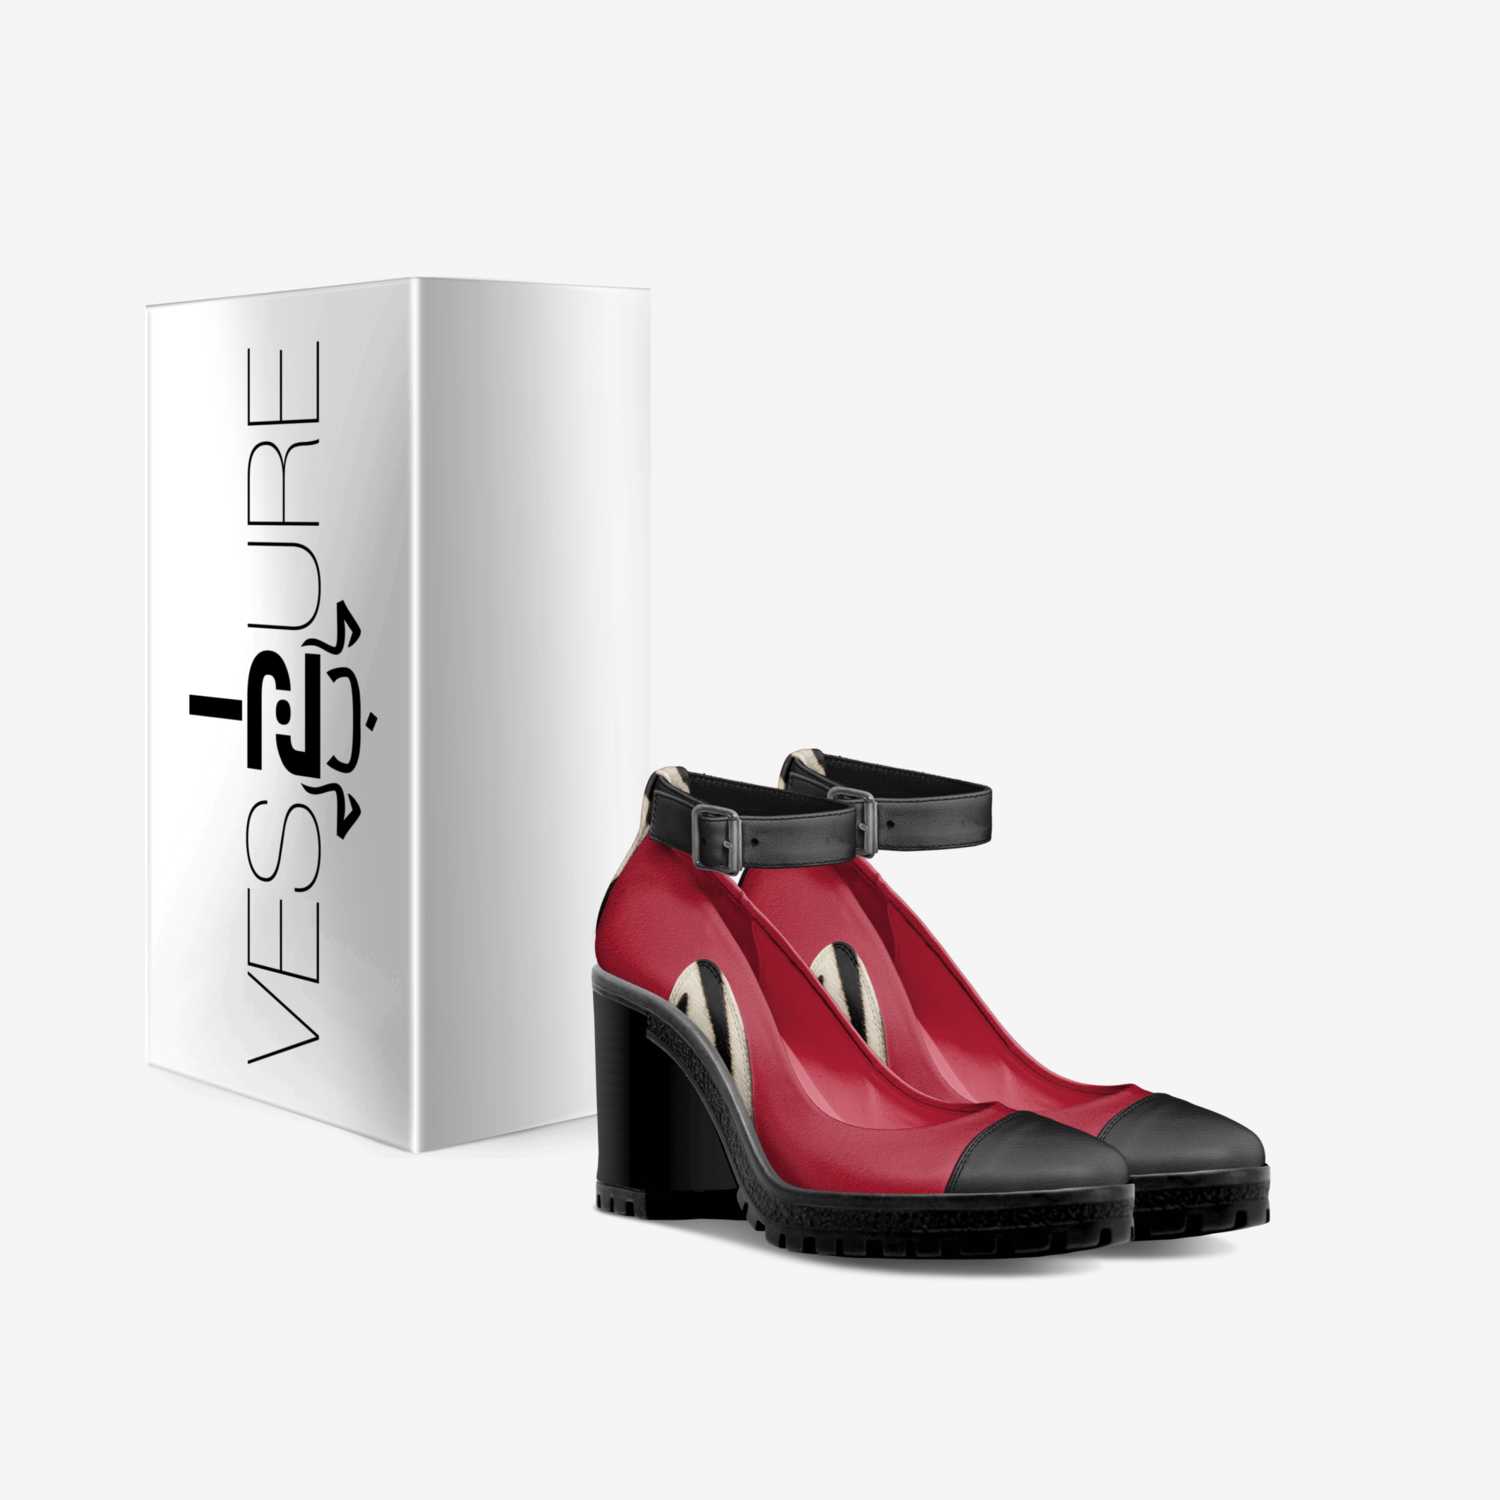 Ves2ure 10 custom made in Italy shoes by Jordan Warren Jr | Box view